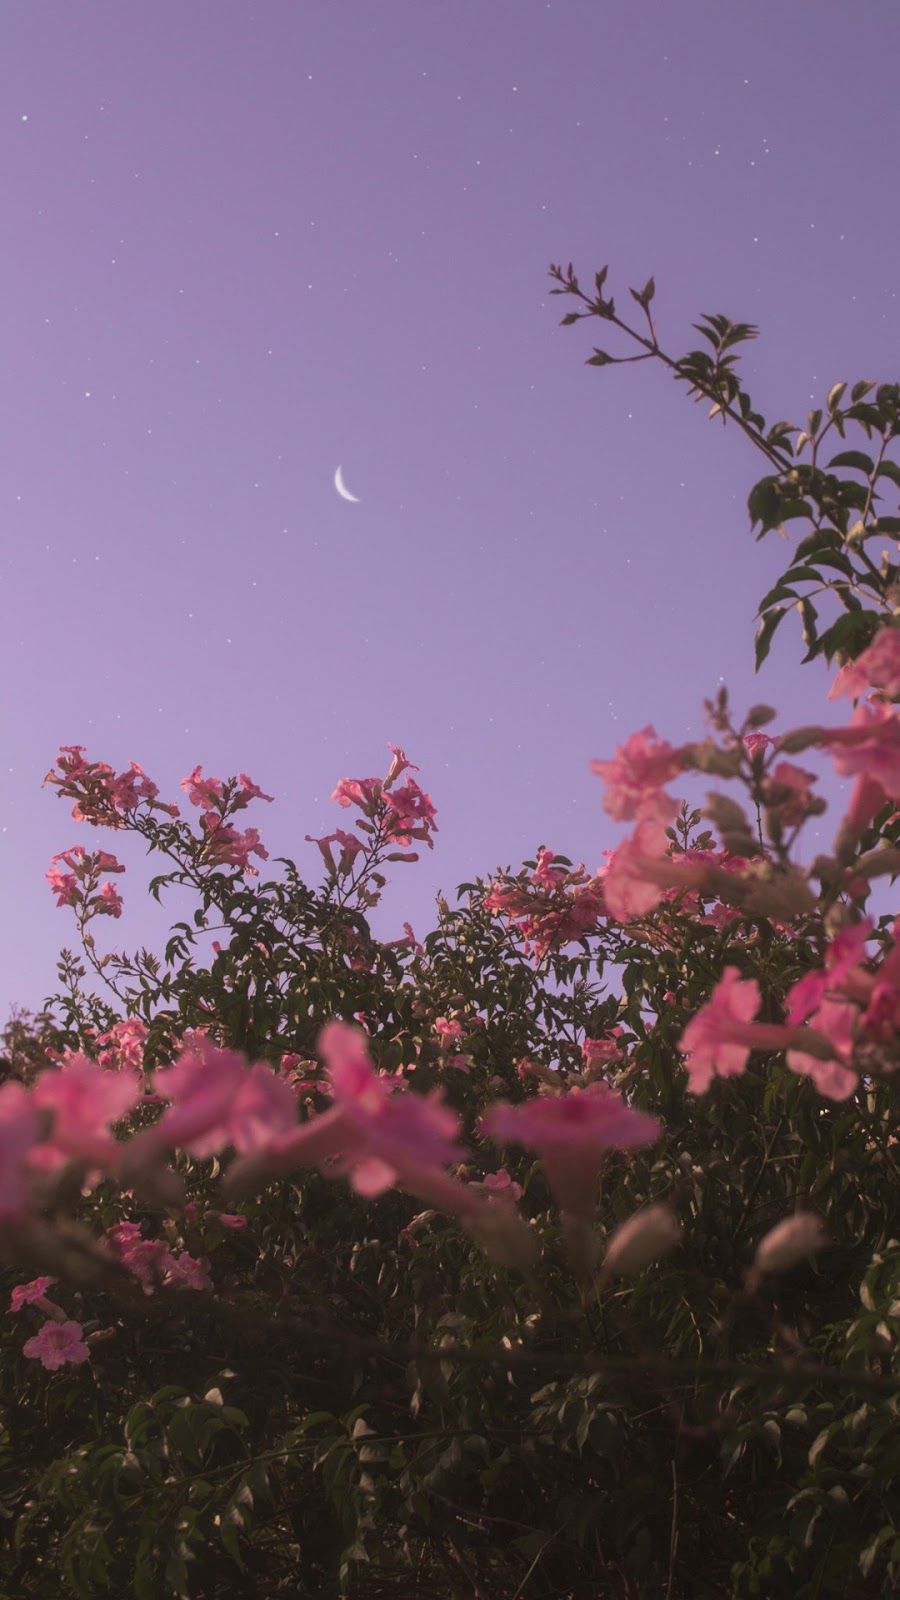 Flower under night sky